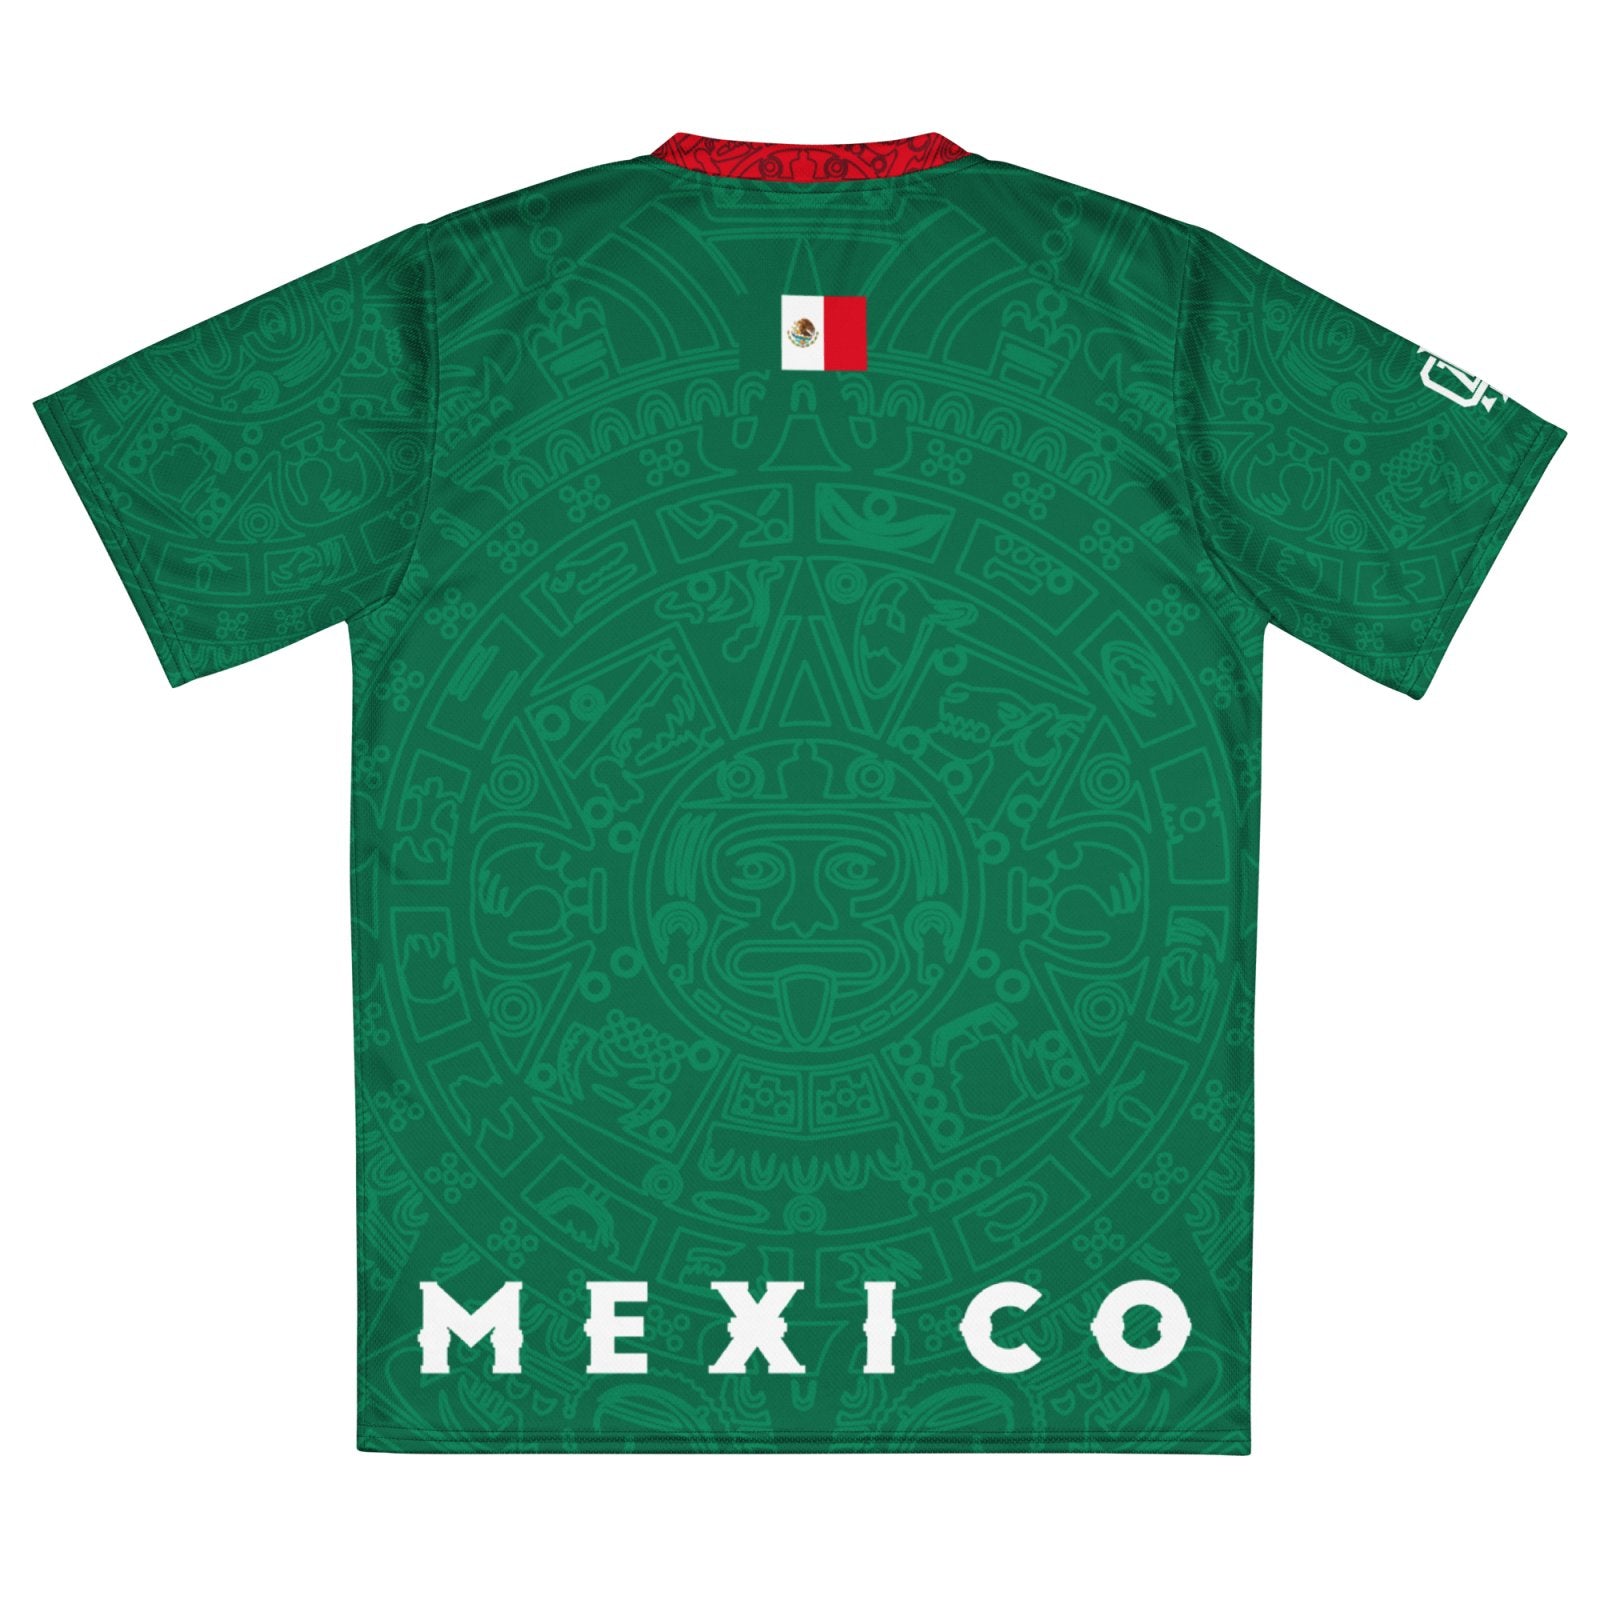 Mexico OG Green Jersey - IronGrind Athletics - activewear - gymshark - alphalete